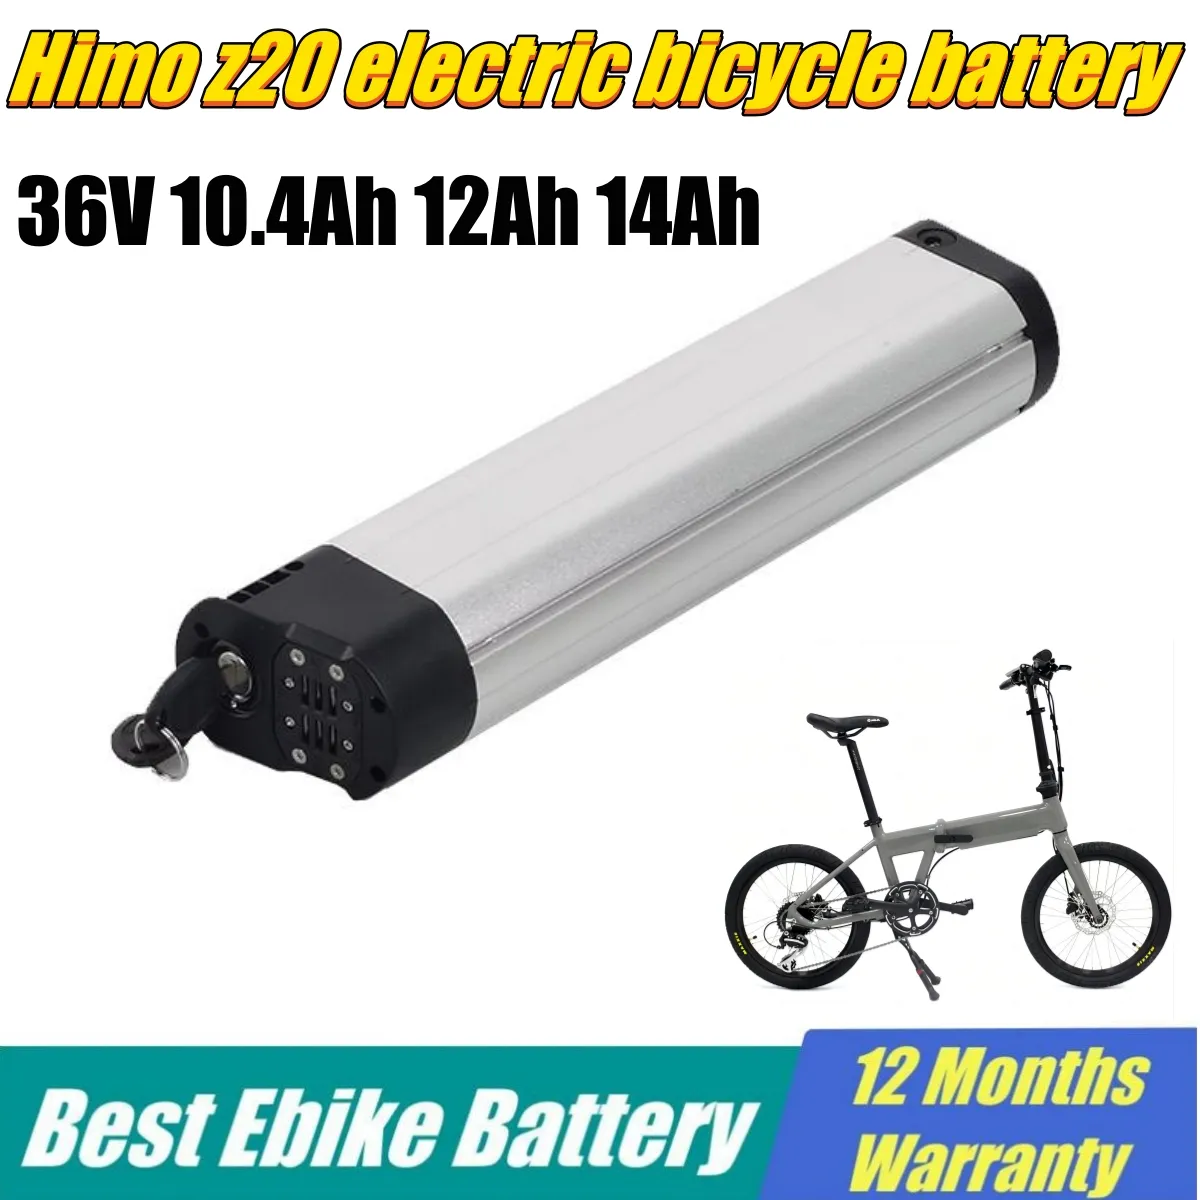 Batteria al litio pieghevole E-bike 36V 10.4Ah 12Ah 14Ah per batteria bici elettrica Himo z20